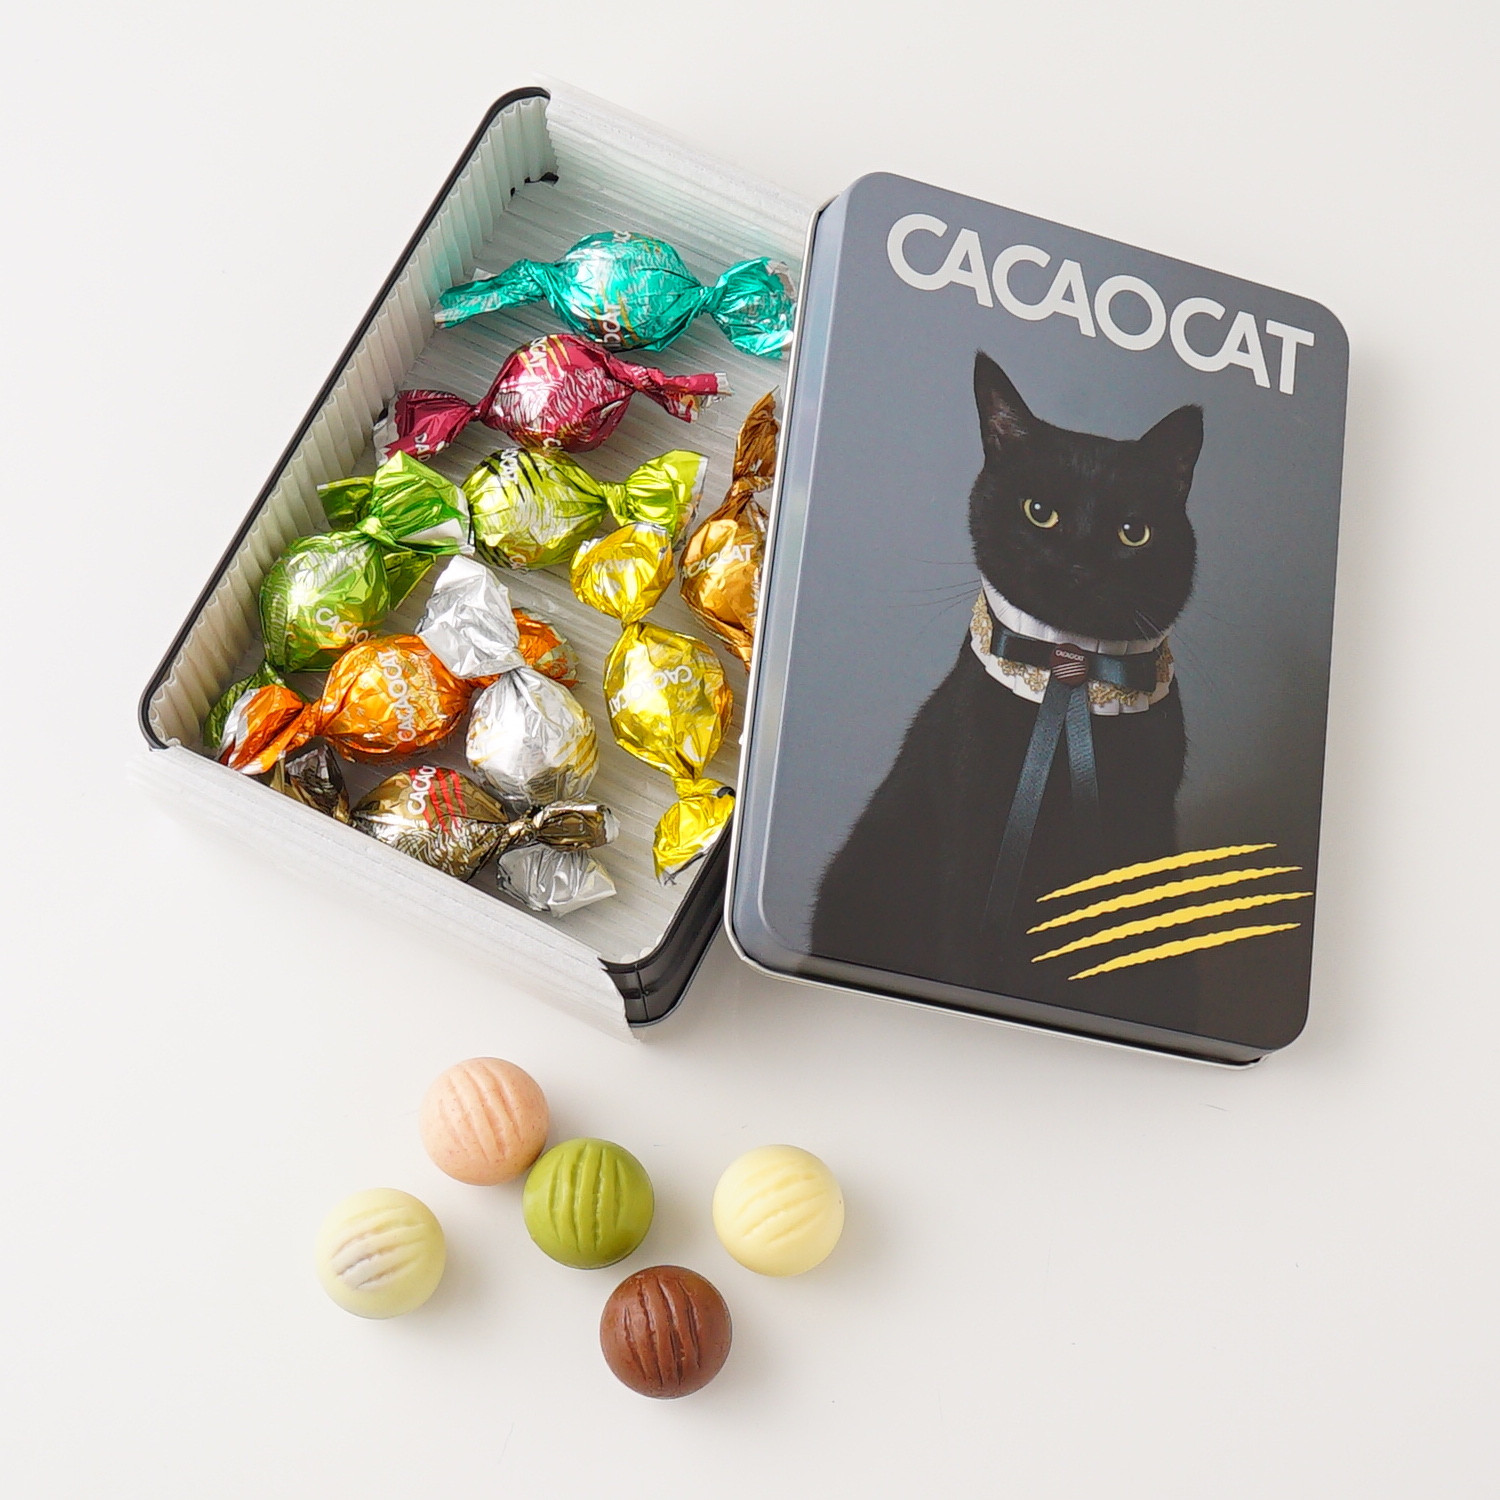 【CACAOCAT】 CACAOCAT缶 ミックス 14個入り CAT 1